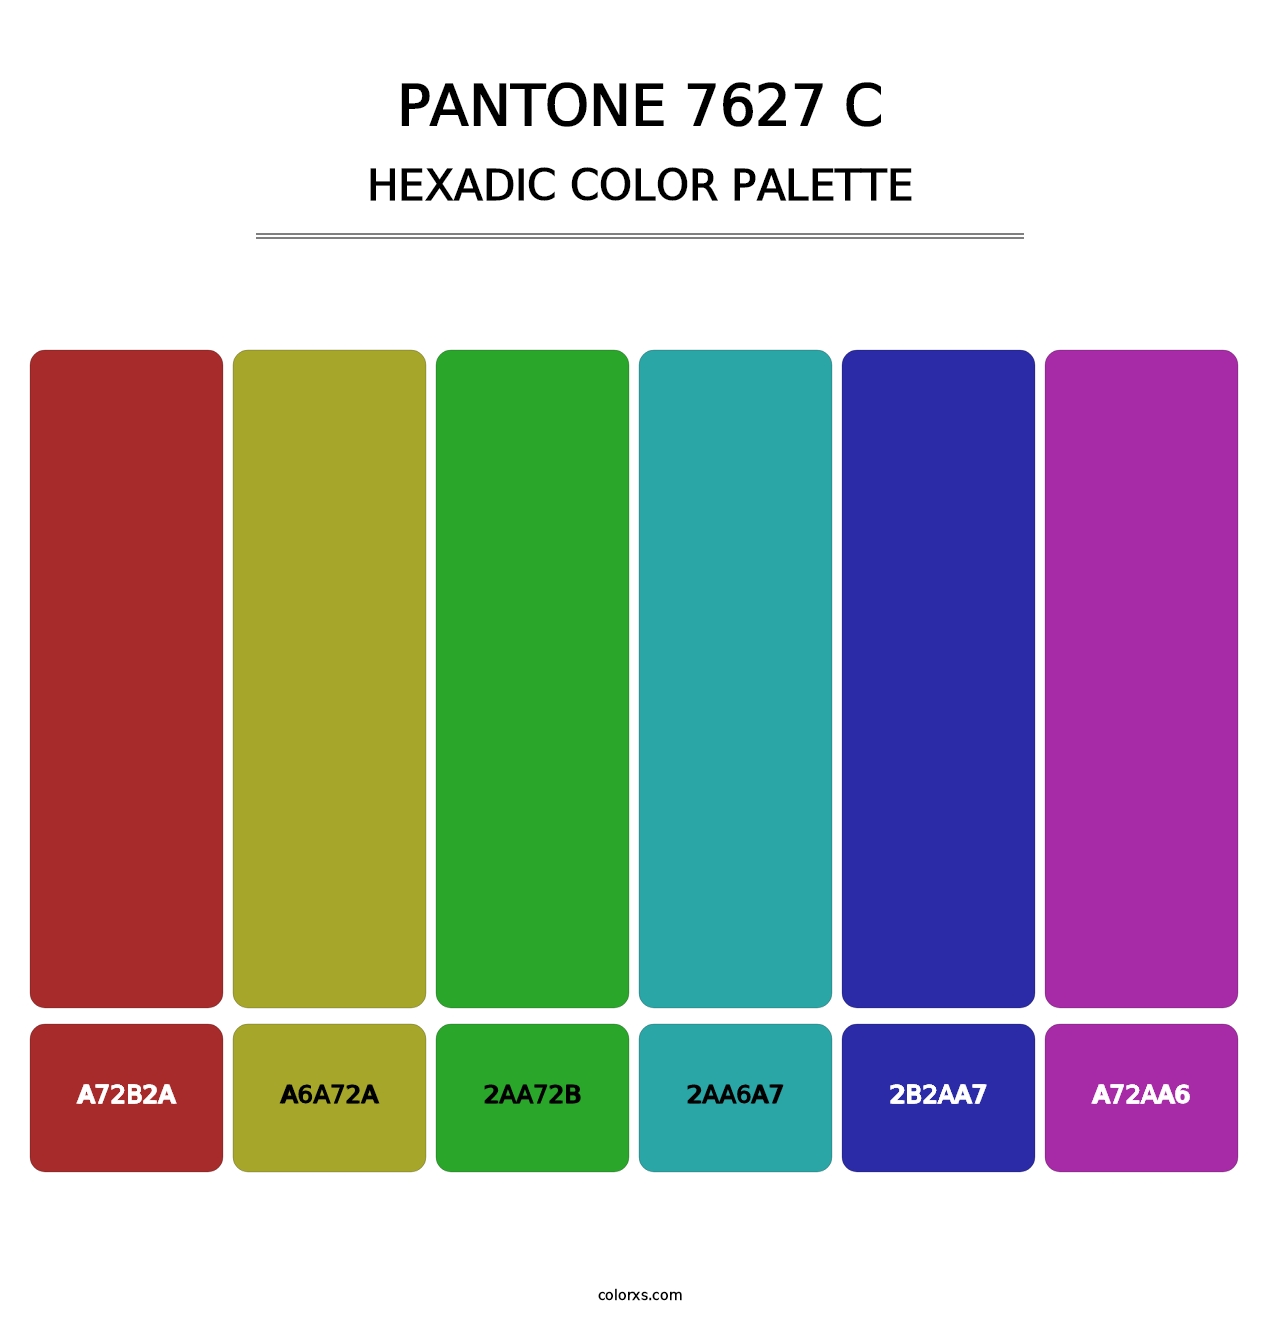 PANTONE 7627 C - Hexadic Color Palette